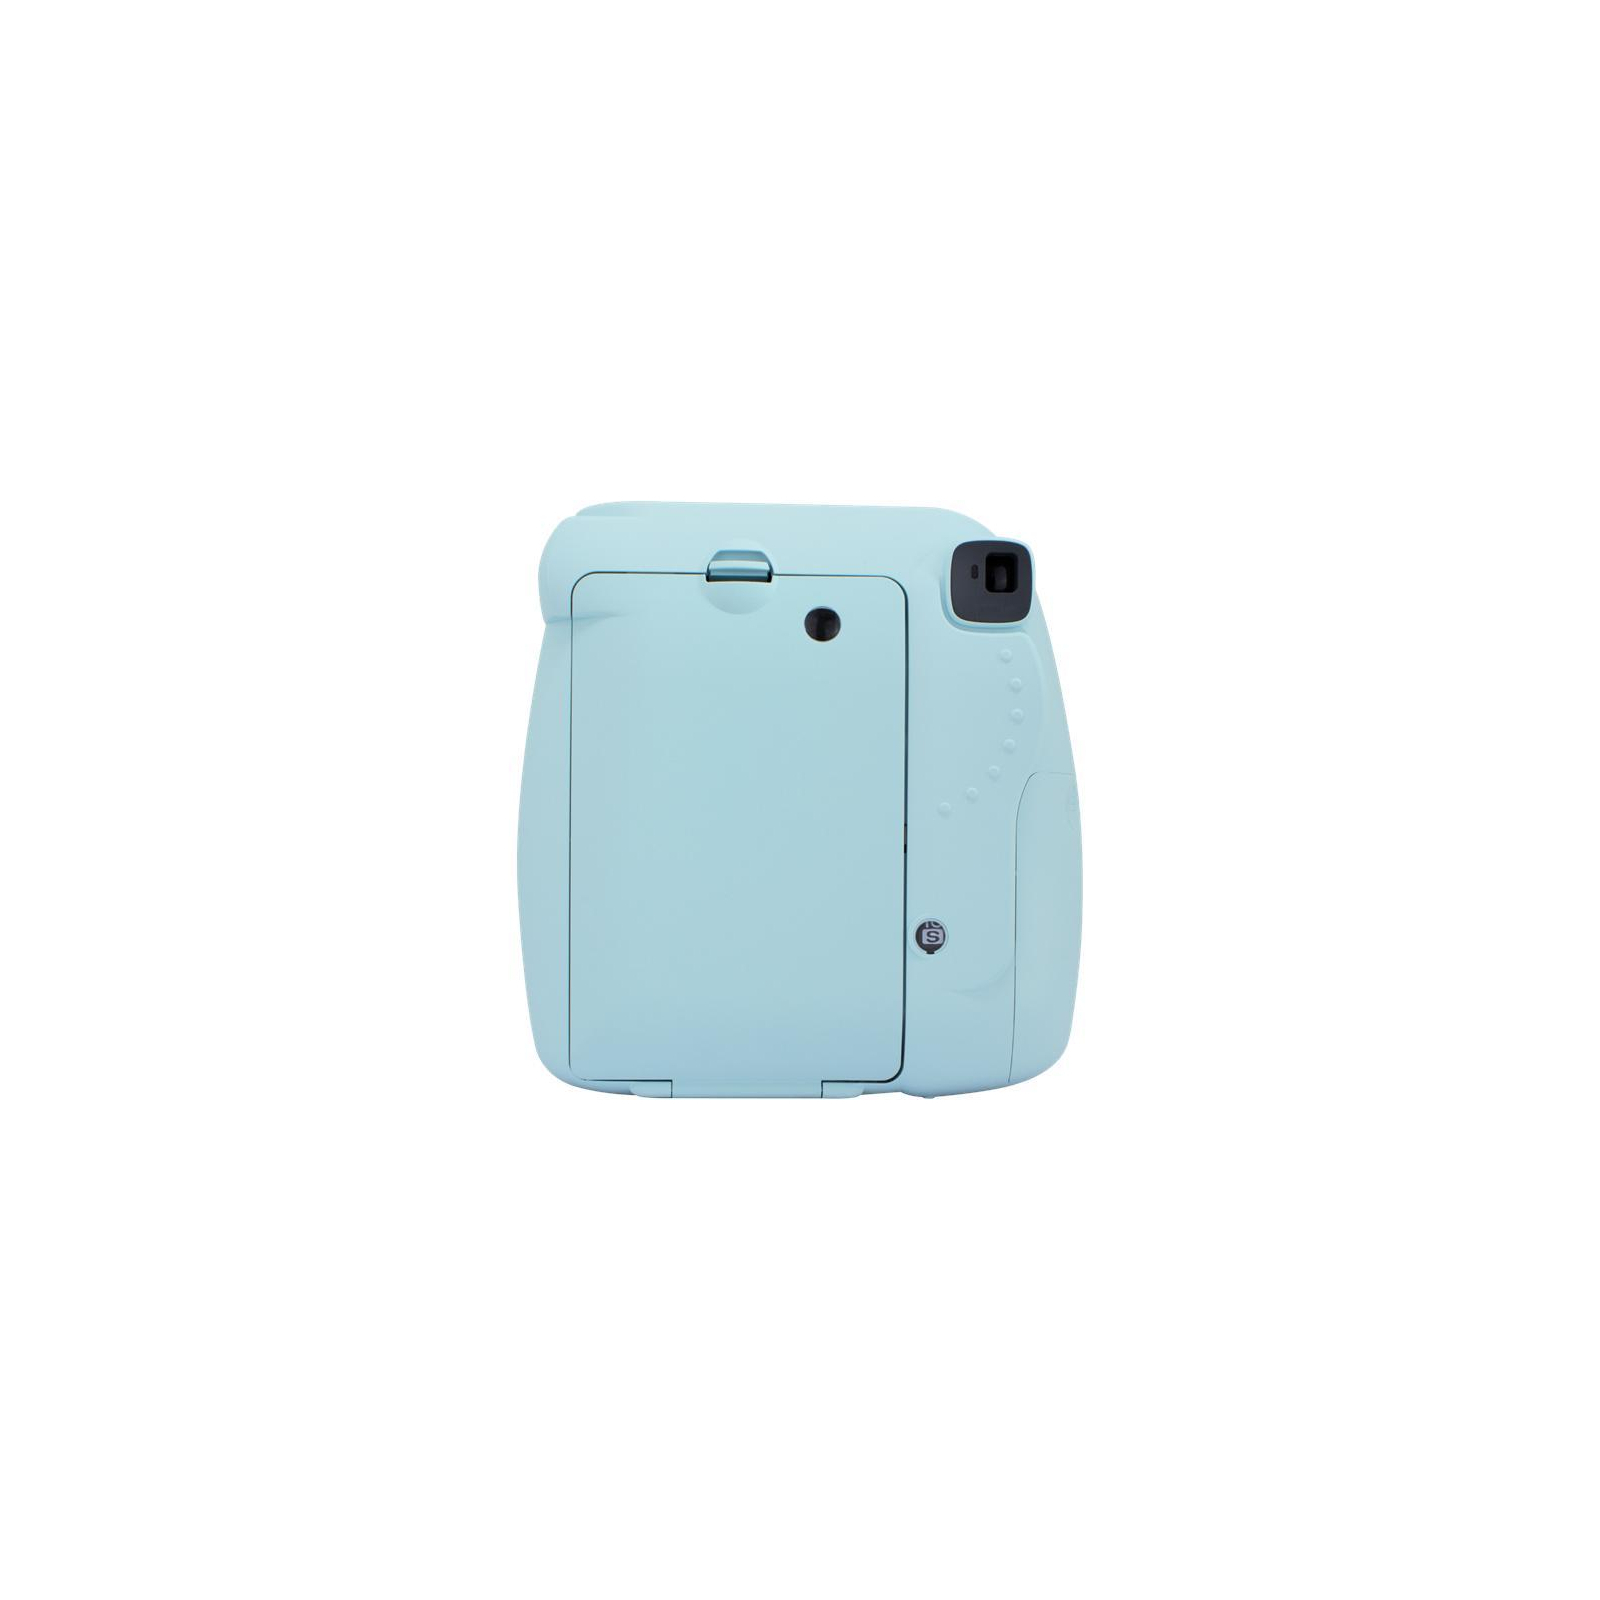 Камера моментальной печати Fujifilm Instax Mini 9 CAMERA ICE BLUE TH EX D (16550693) изображение 8